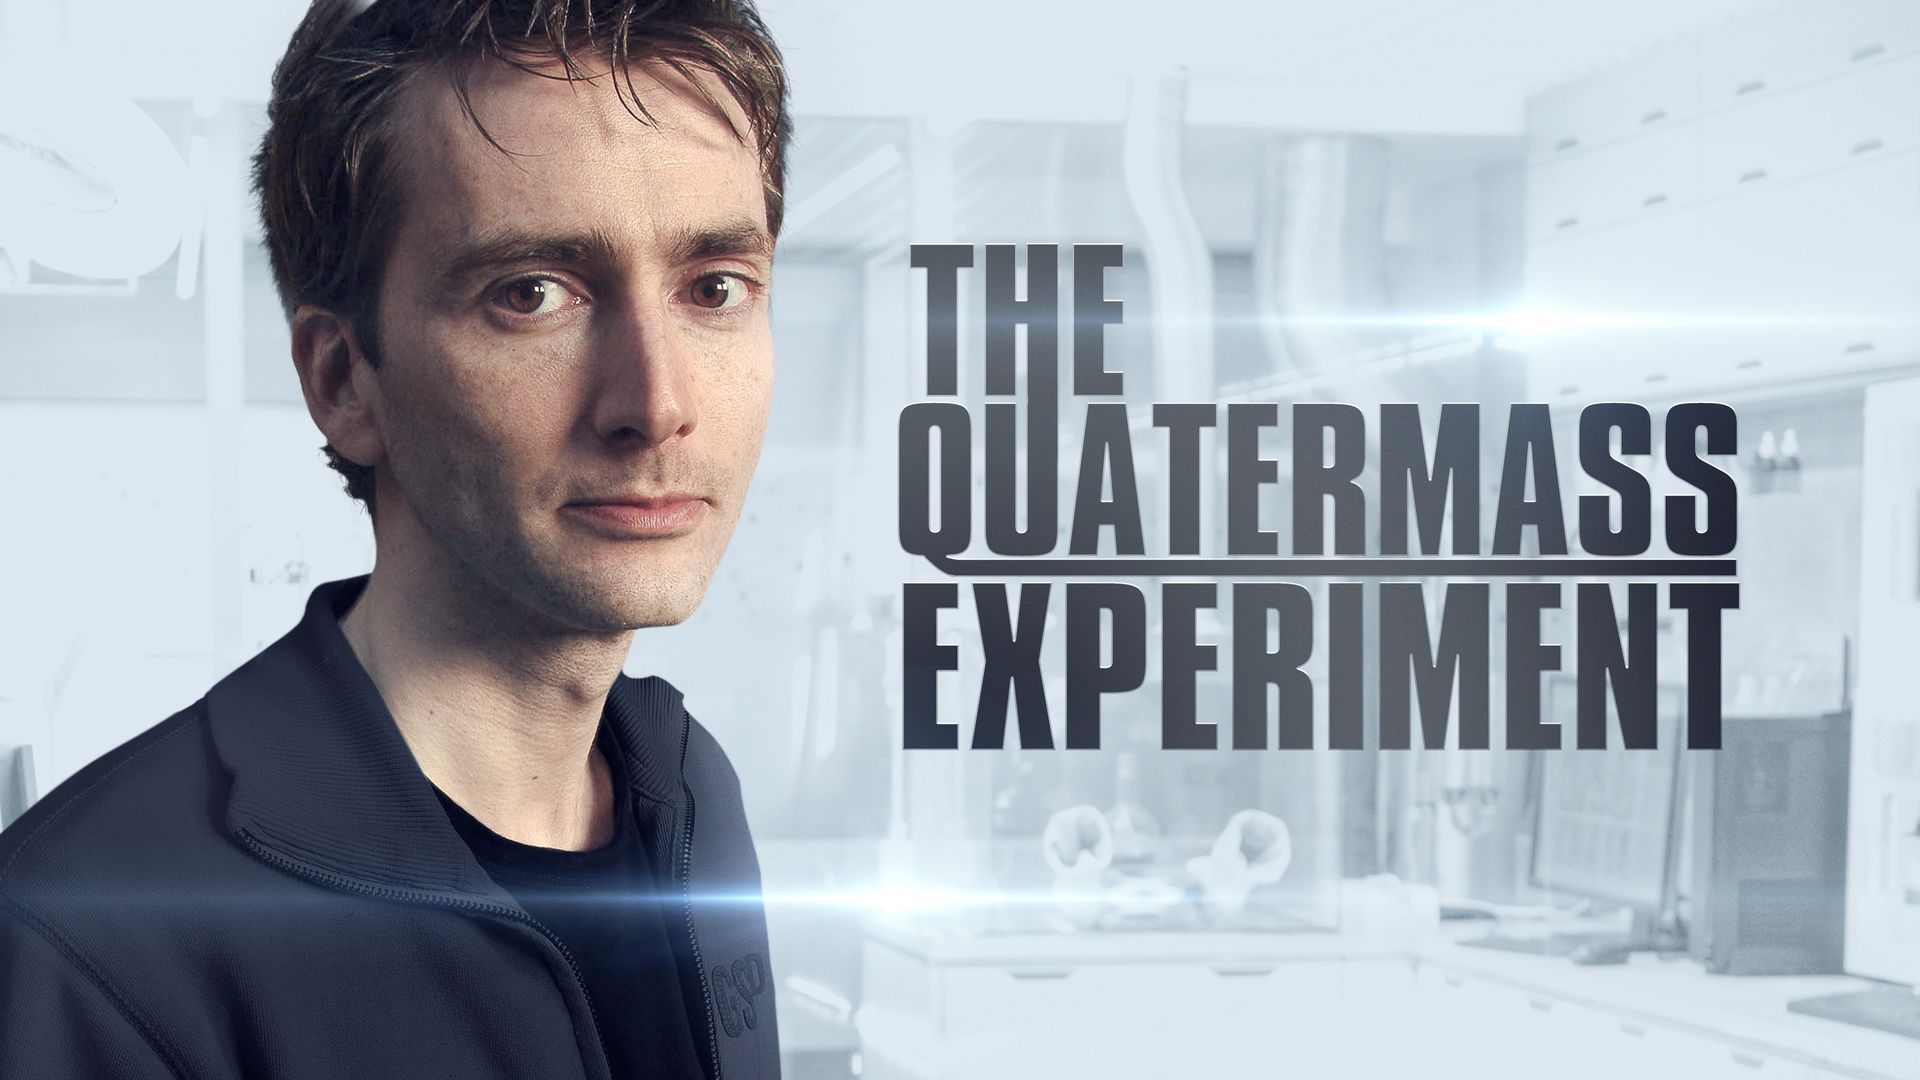 The Quatermass Experiment Backdrop